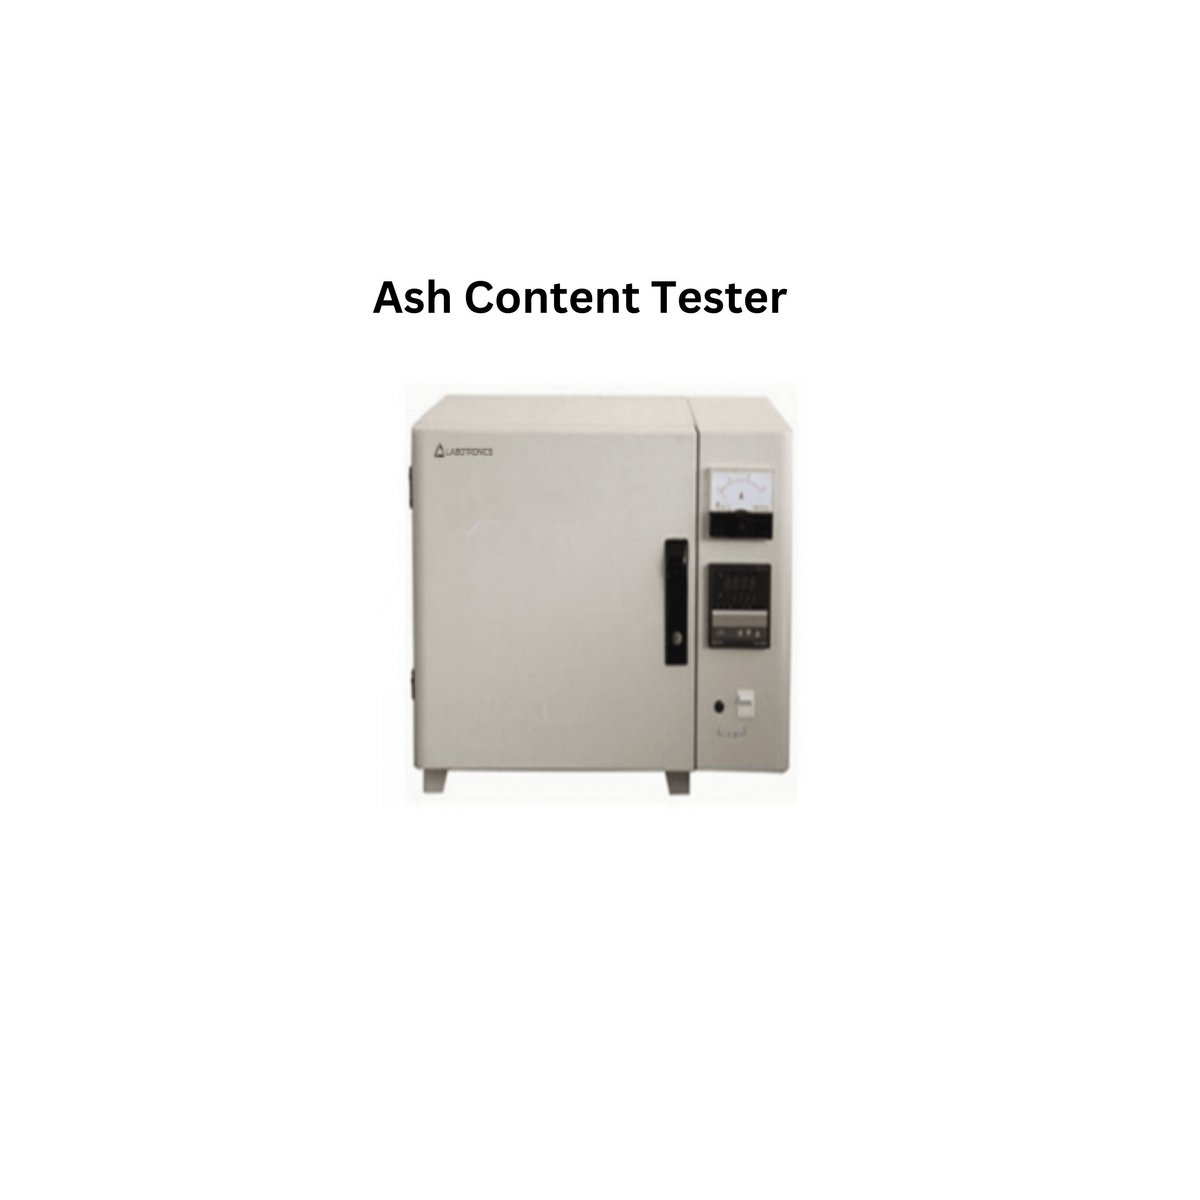 Ash Content Tester.jpg